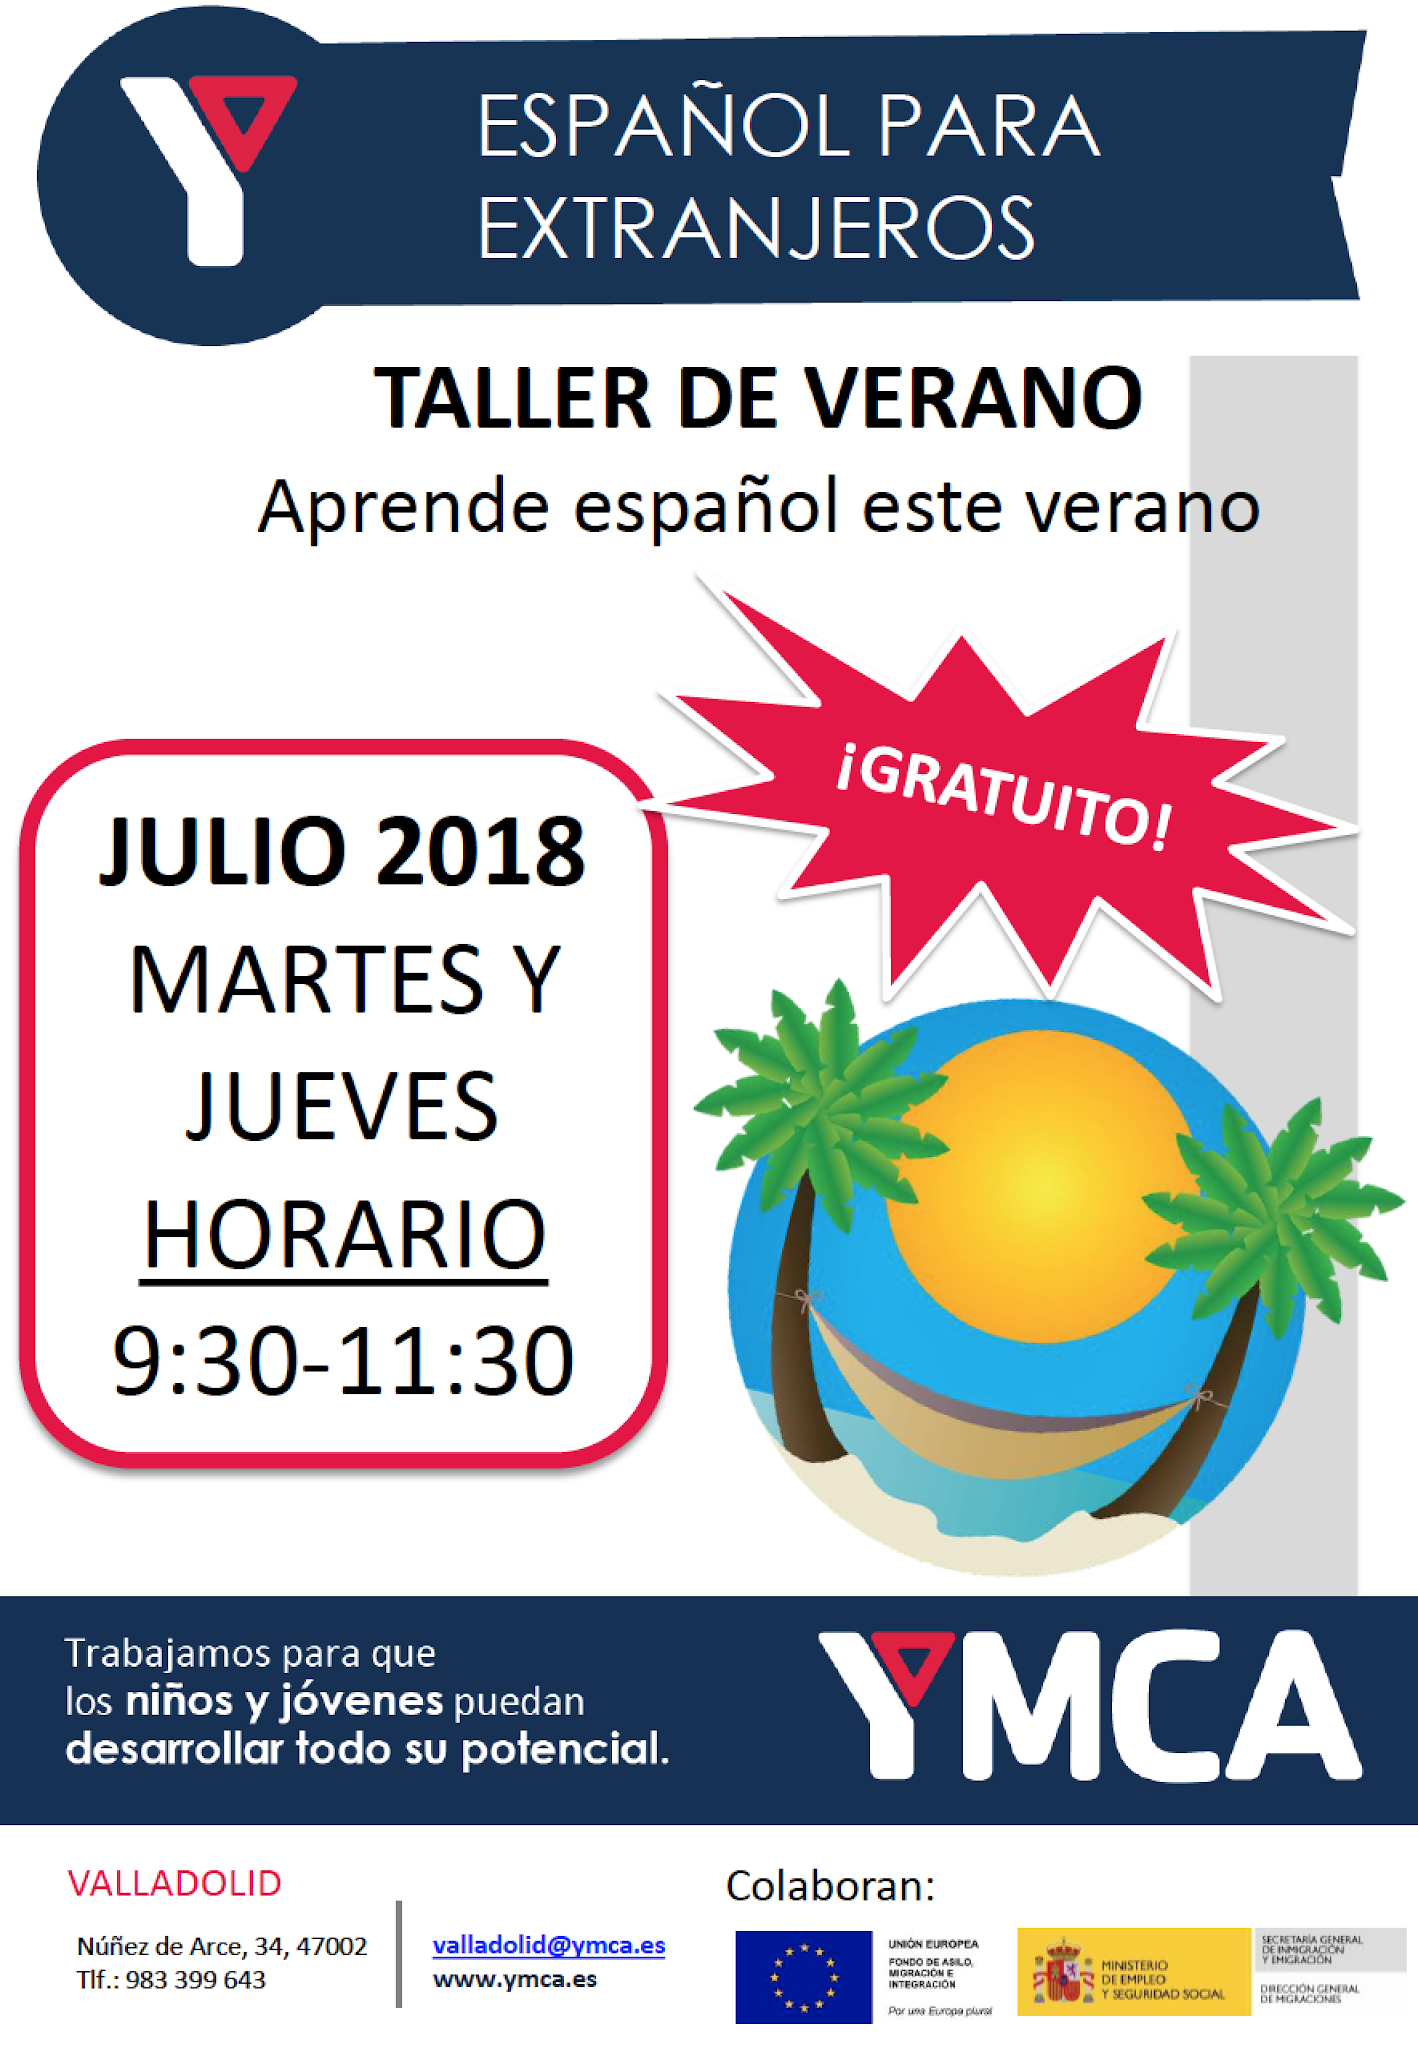 Español para extranjeros. Taller de verano de YMCA